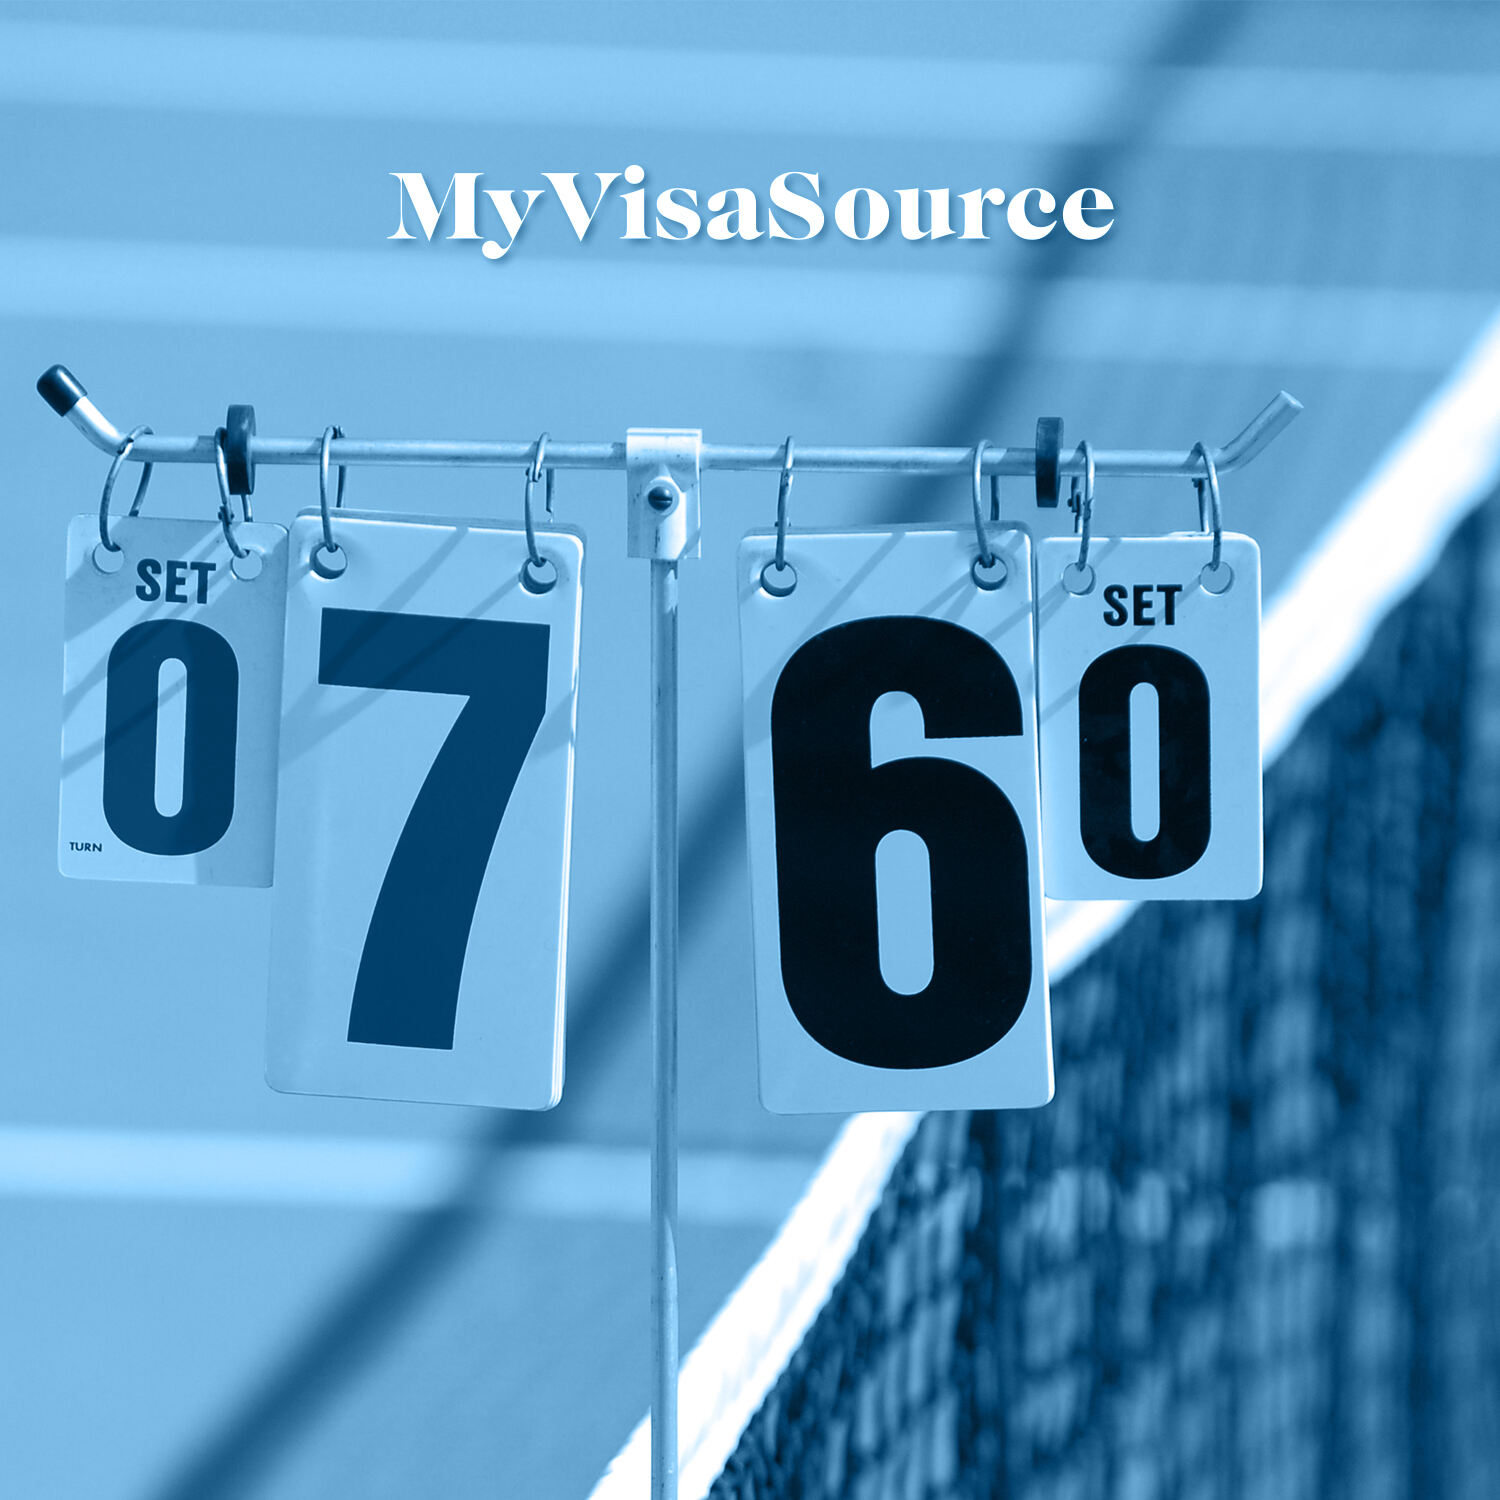 https://www.myvisasource.com/hubfs/Compressed%20Blog%20Images/200kb/score-card-at-tennis-game-with-tiebreaker-win-my-visa-source-200kb.jpg